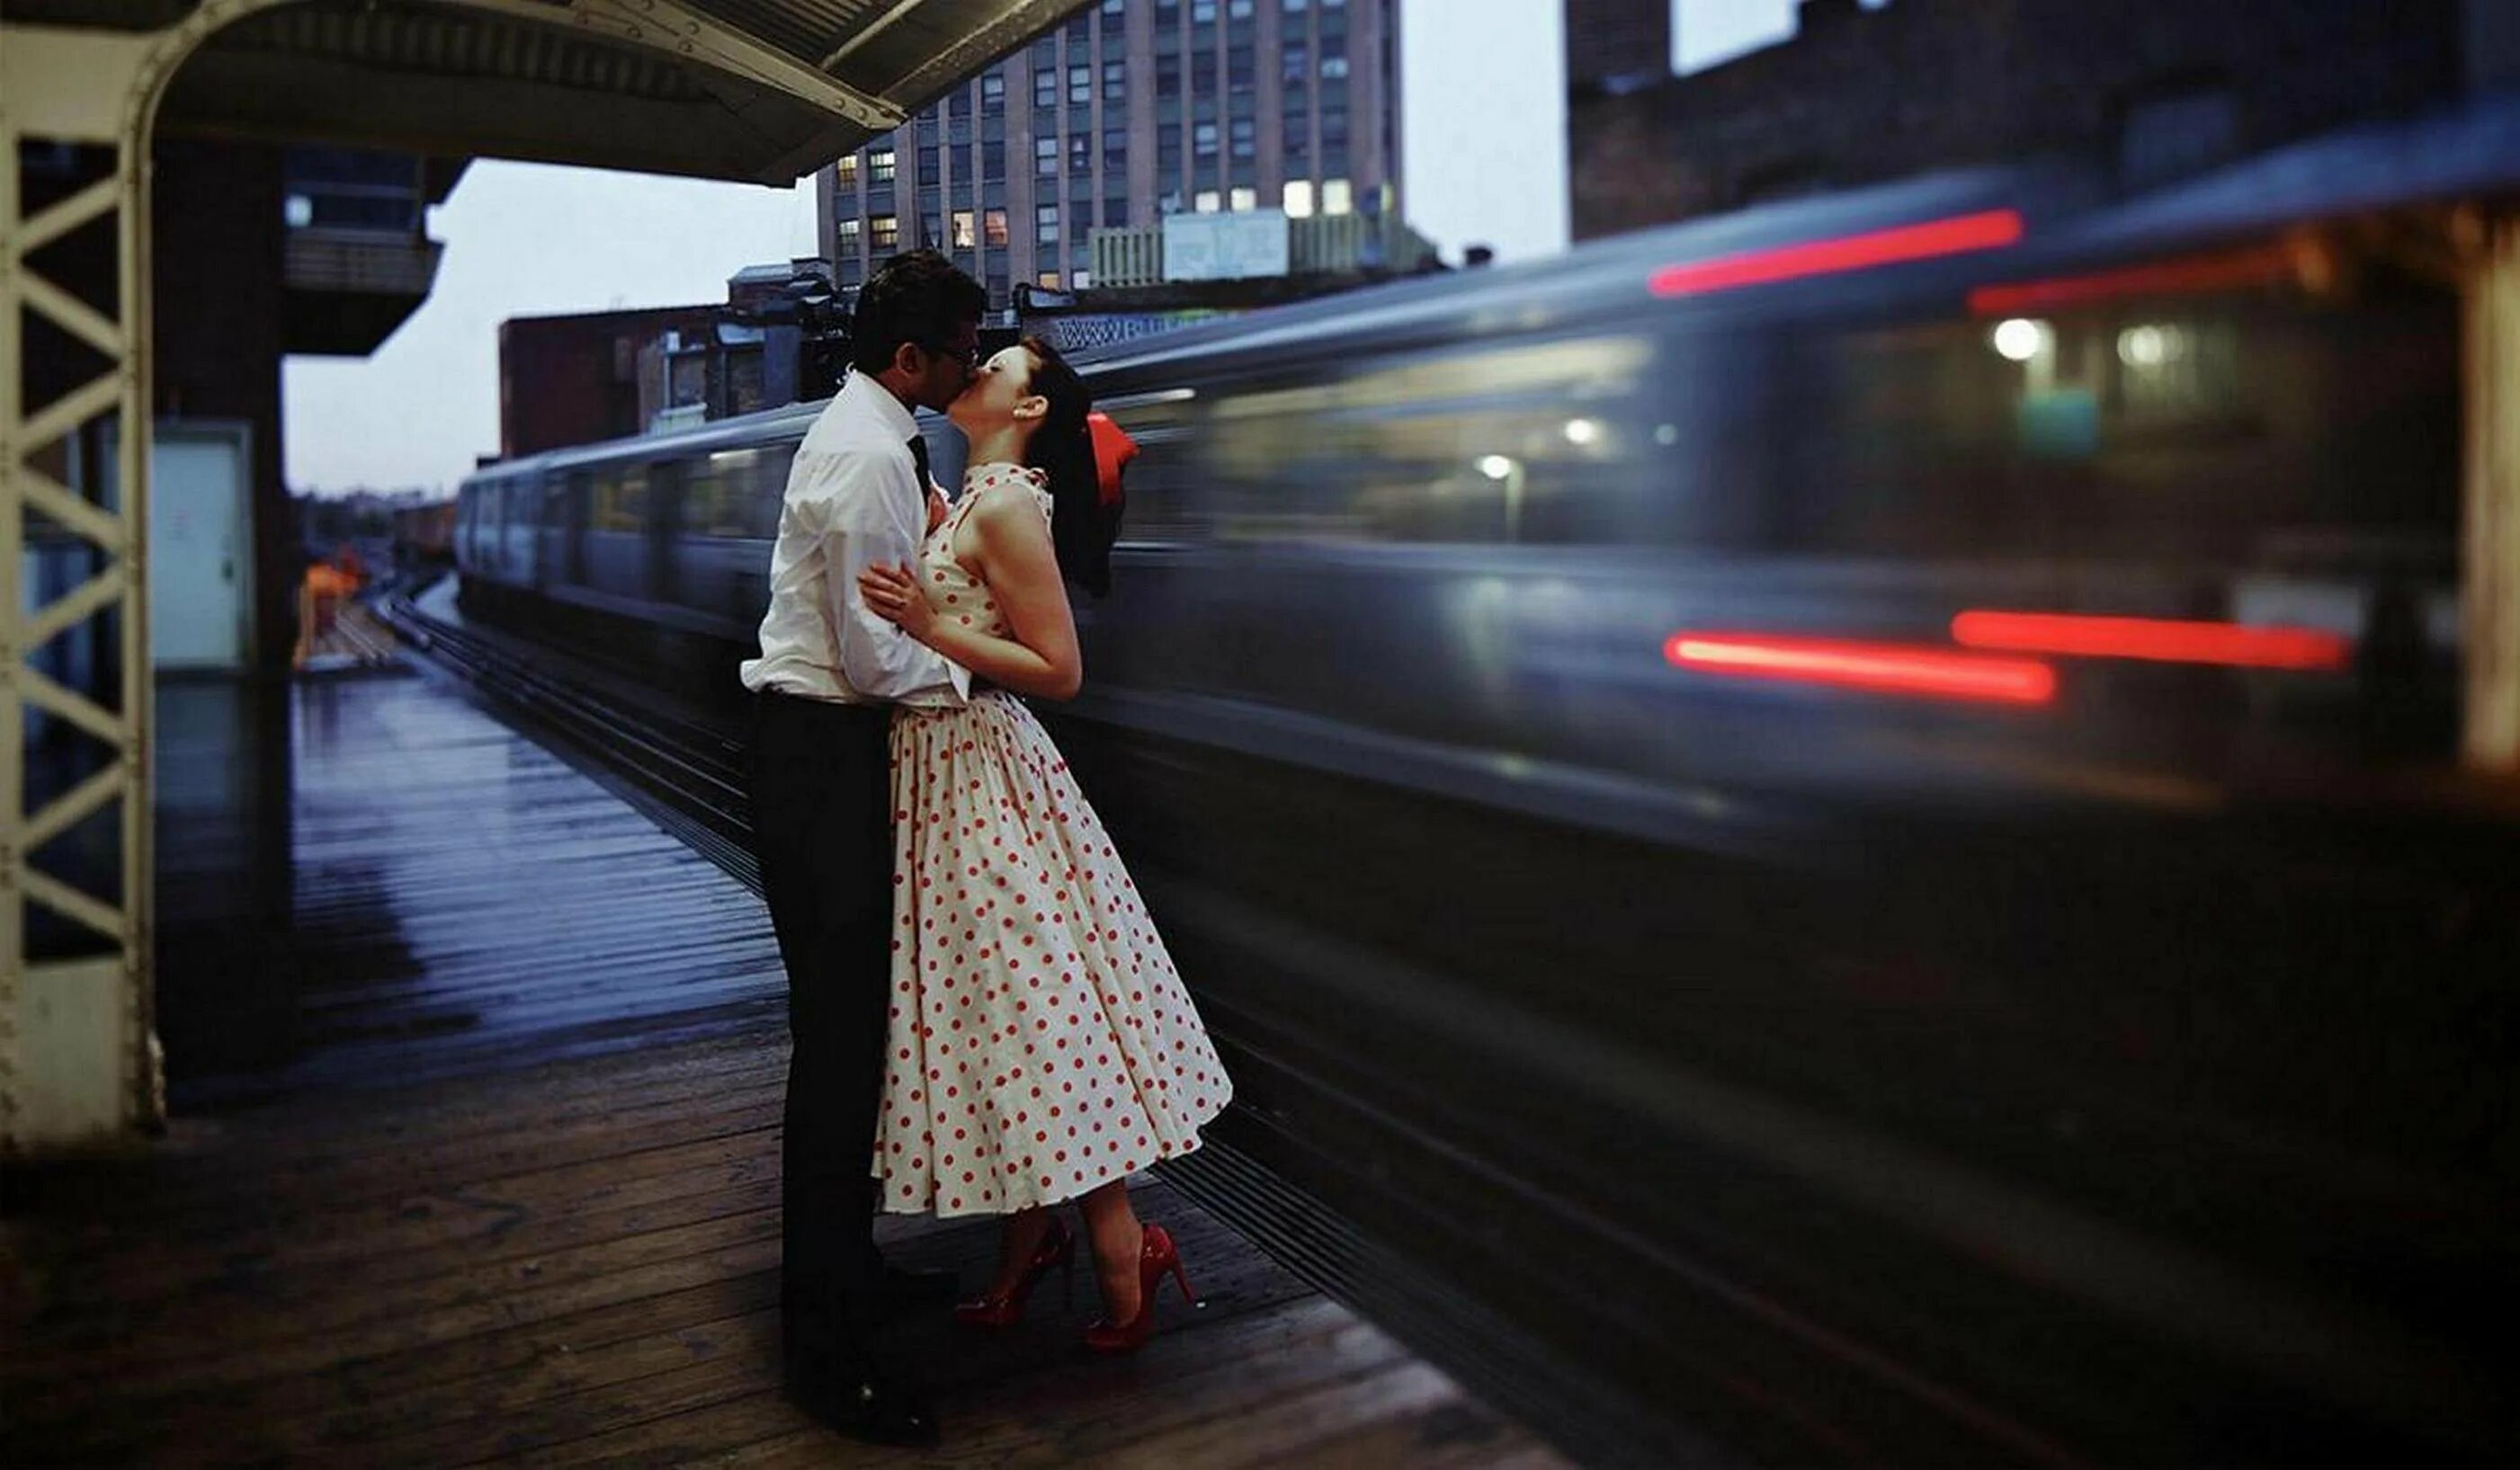 Поцелуй на прощание мы встретимся дома. Пара на вокзале. Поцелуй на вокзале. Парень и девушка на вокзале. Поцелуй на перроне.